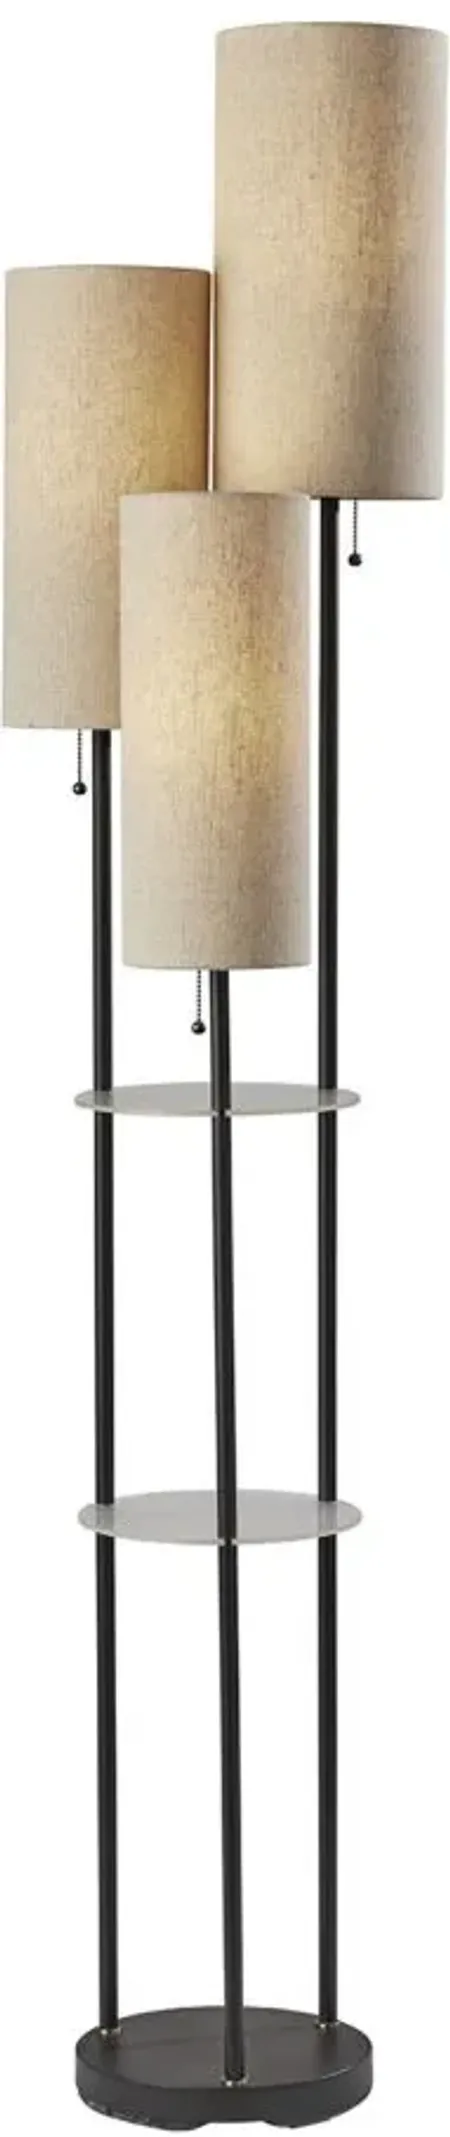 Trio Shelf Floor Lamp in Black by Adesso Inc